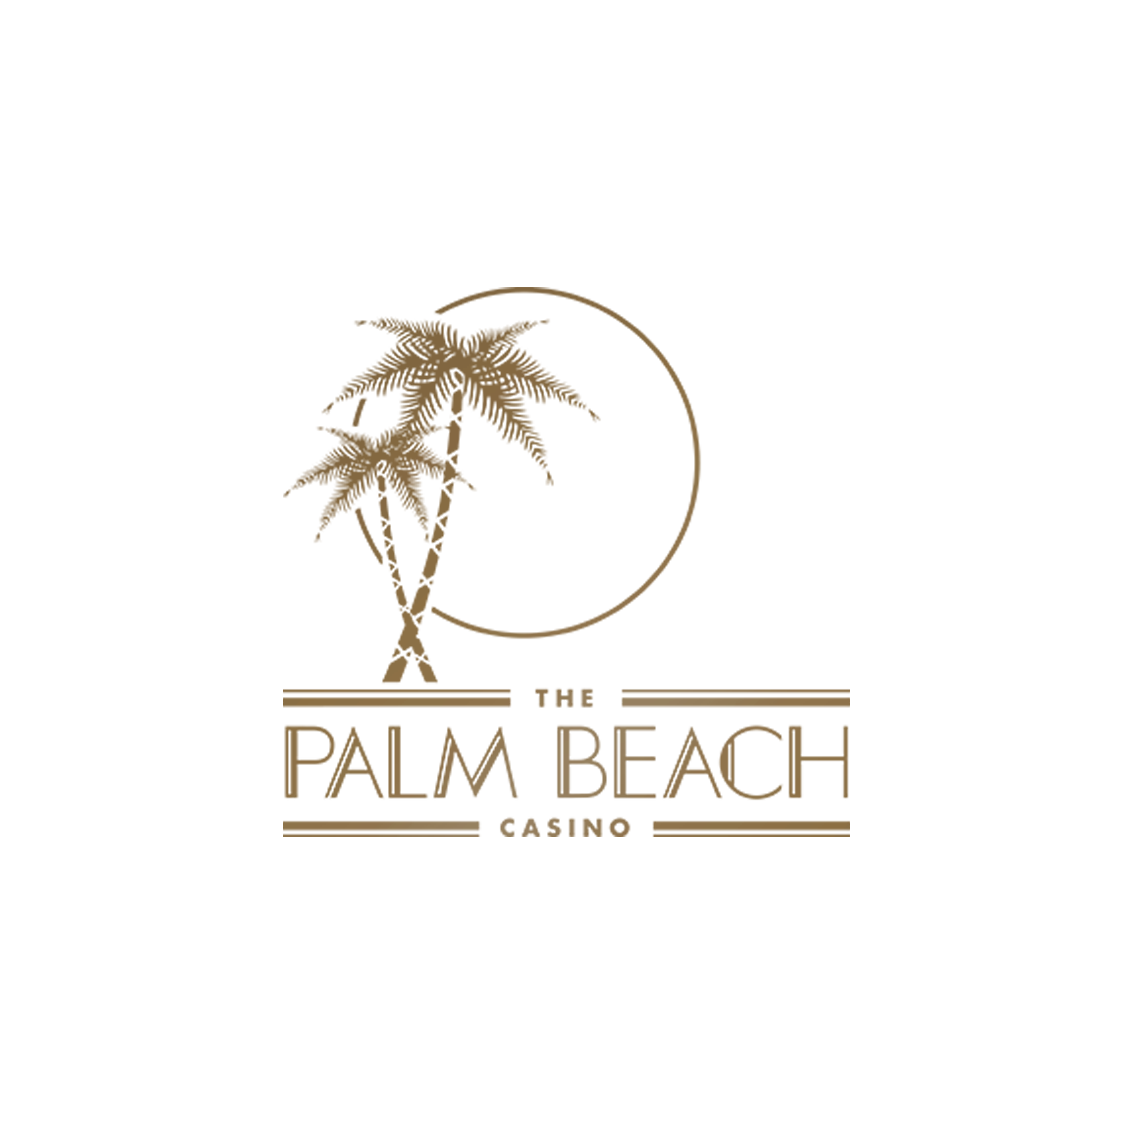 Palm Beach logo gold.png